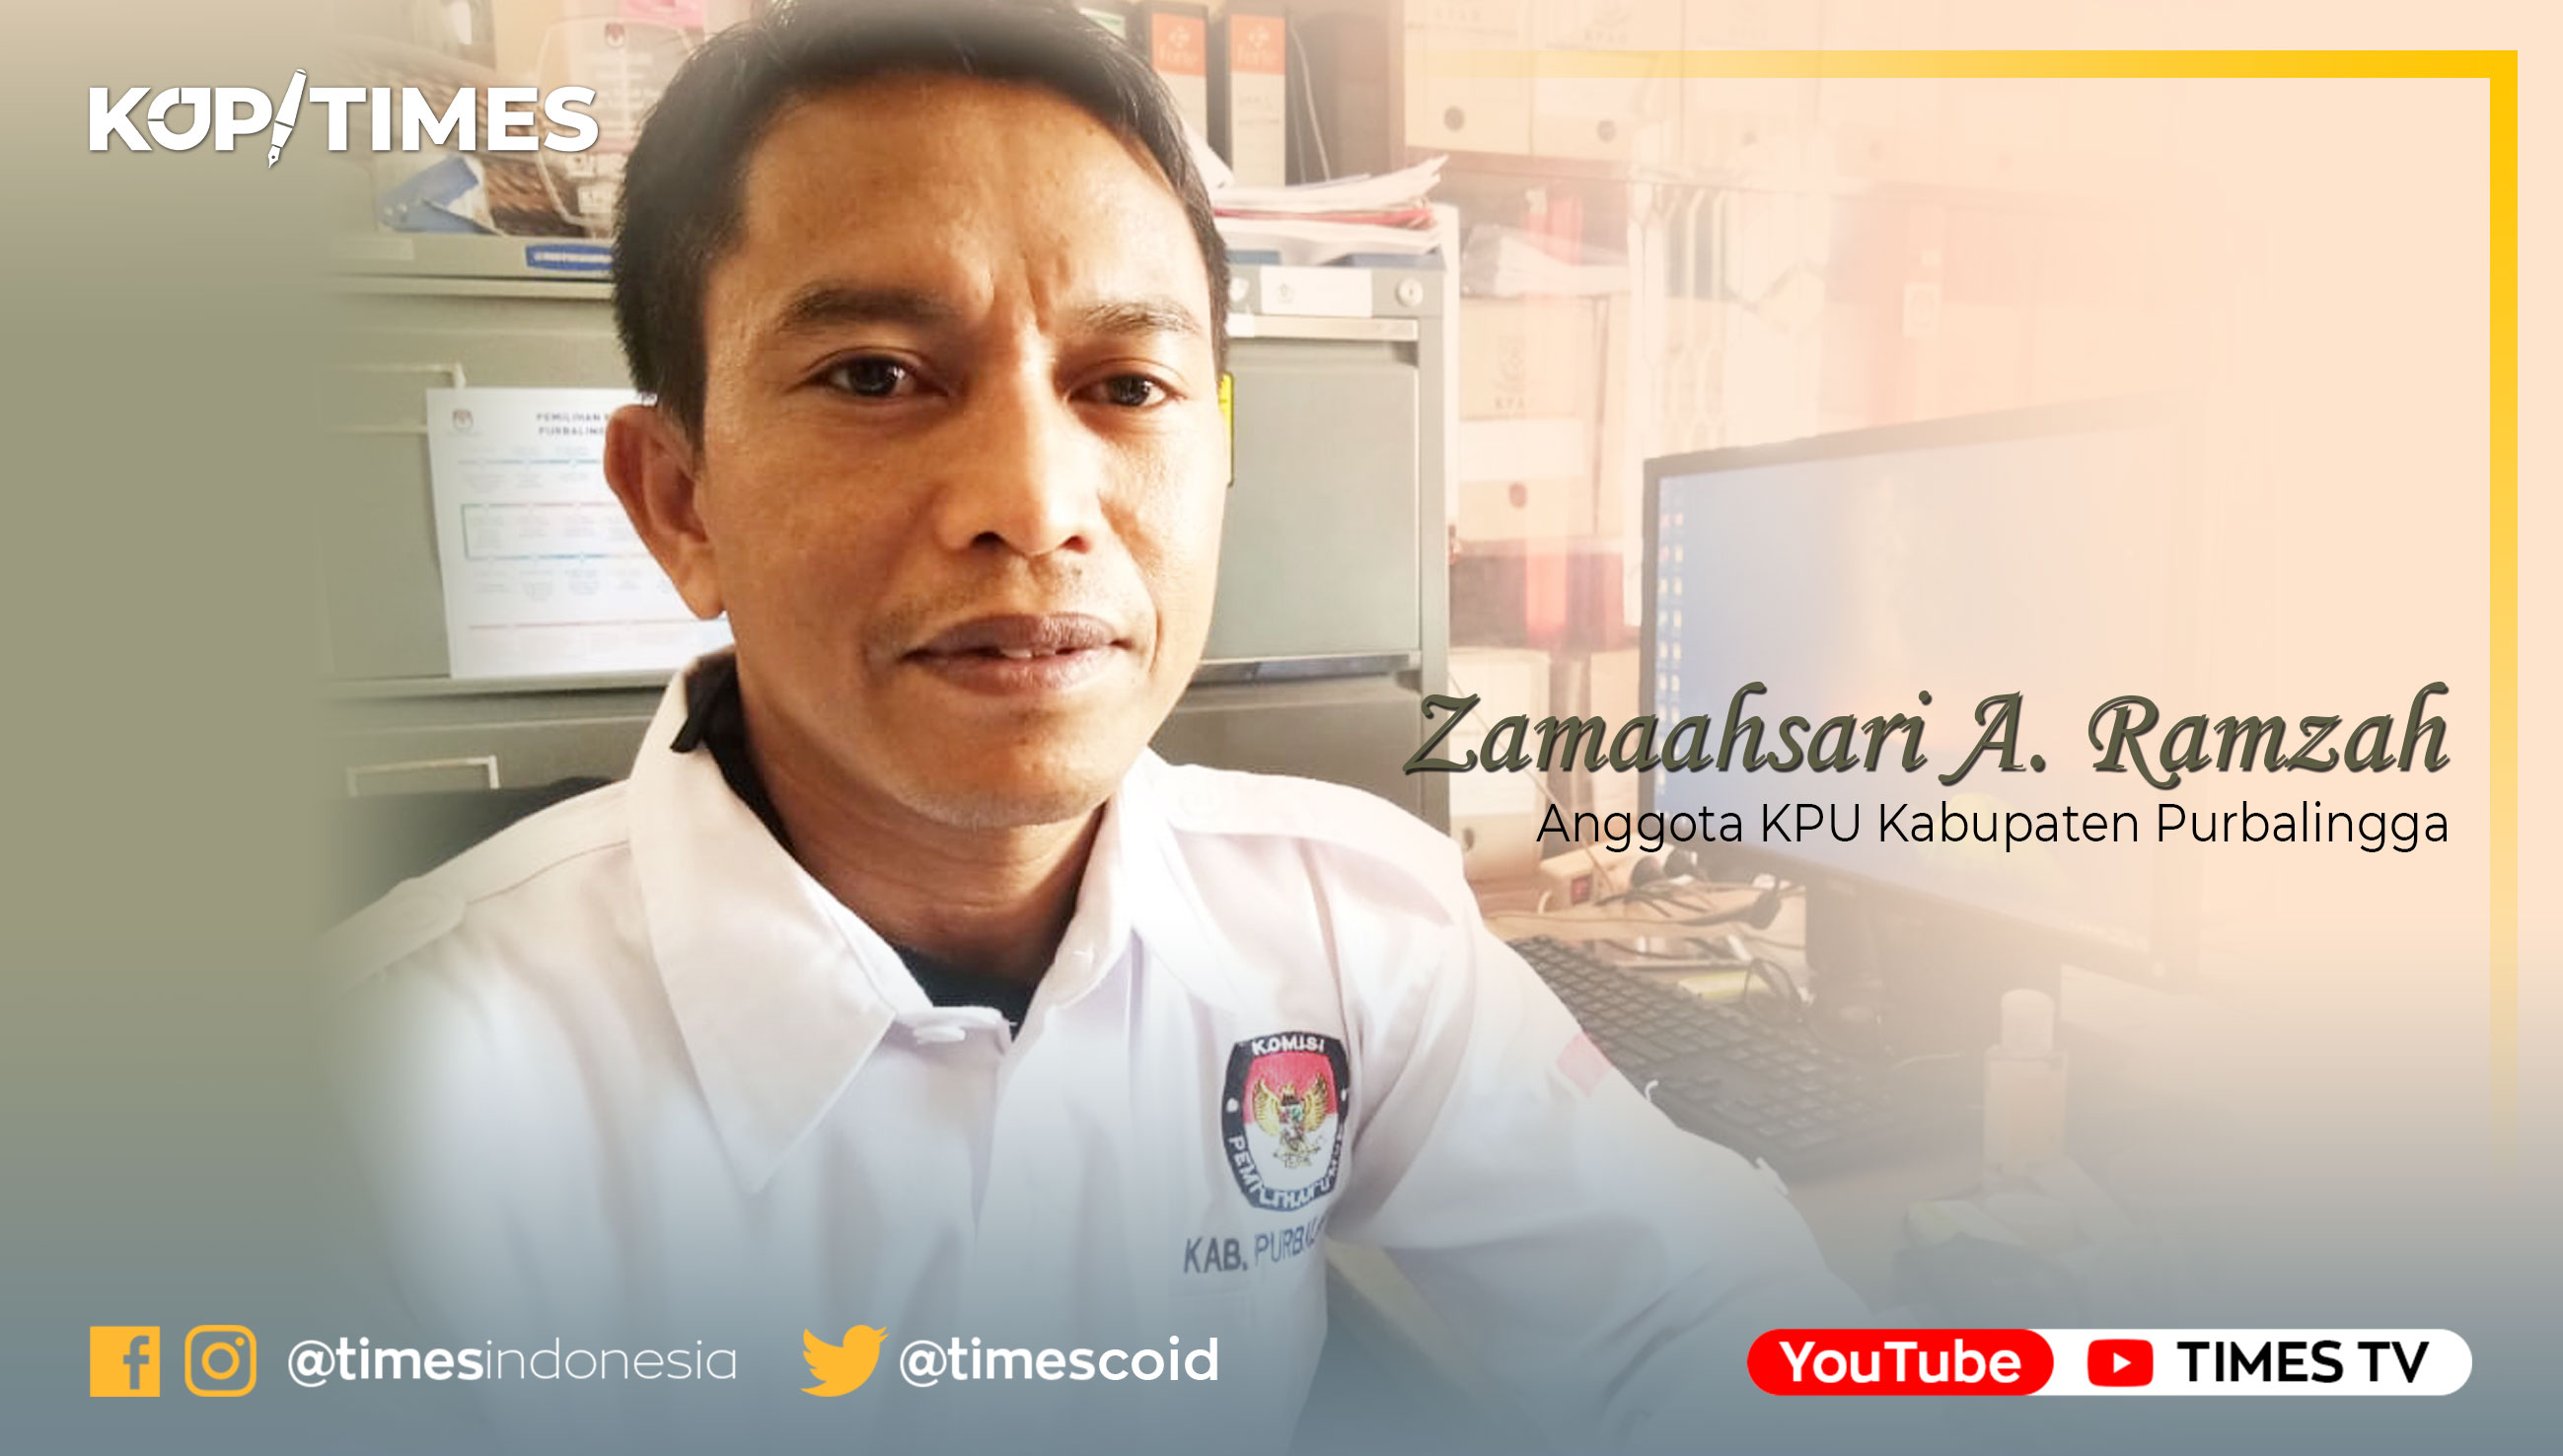 Zamaahsari A. Ramzah, alumni Pascasarjana Ilmu Politik Universitas Indonesia, Anggota KPU Kabupaten Purbalingga.